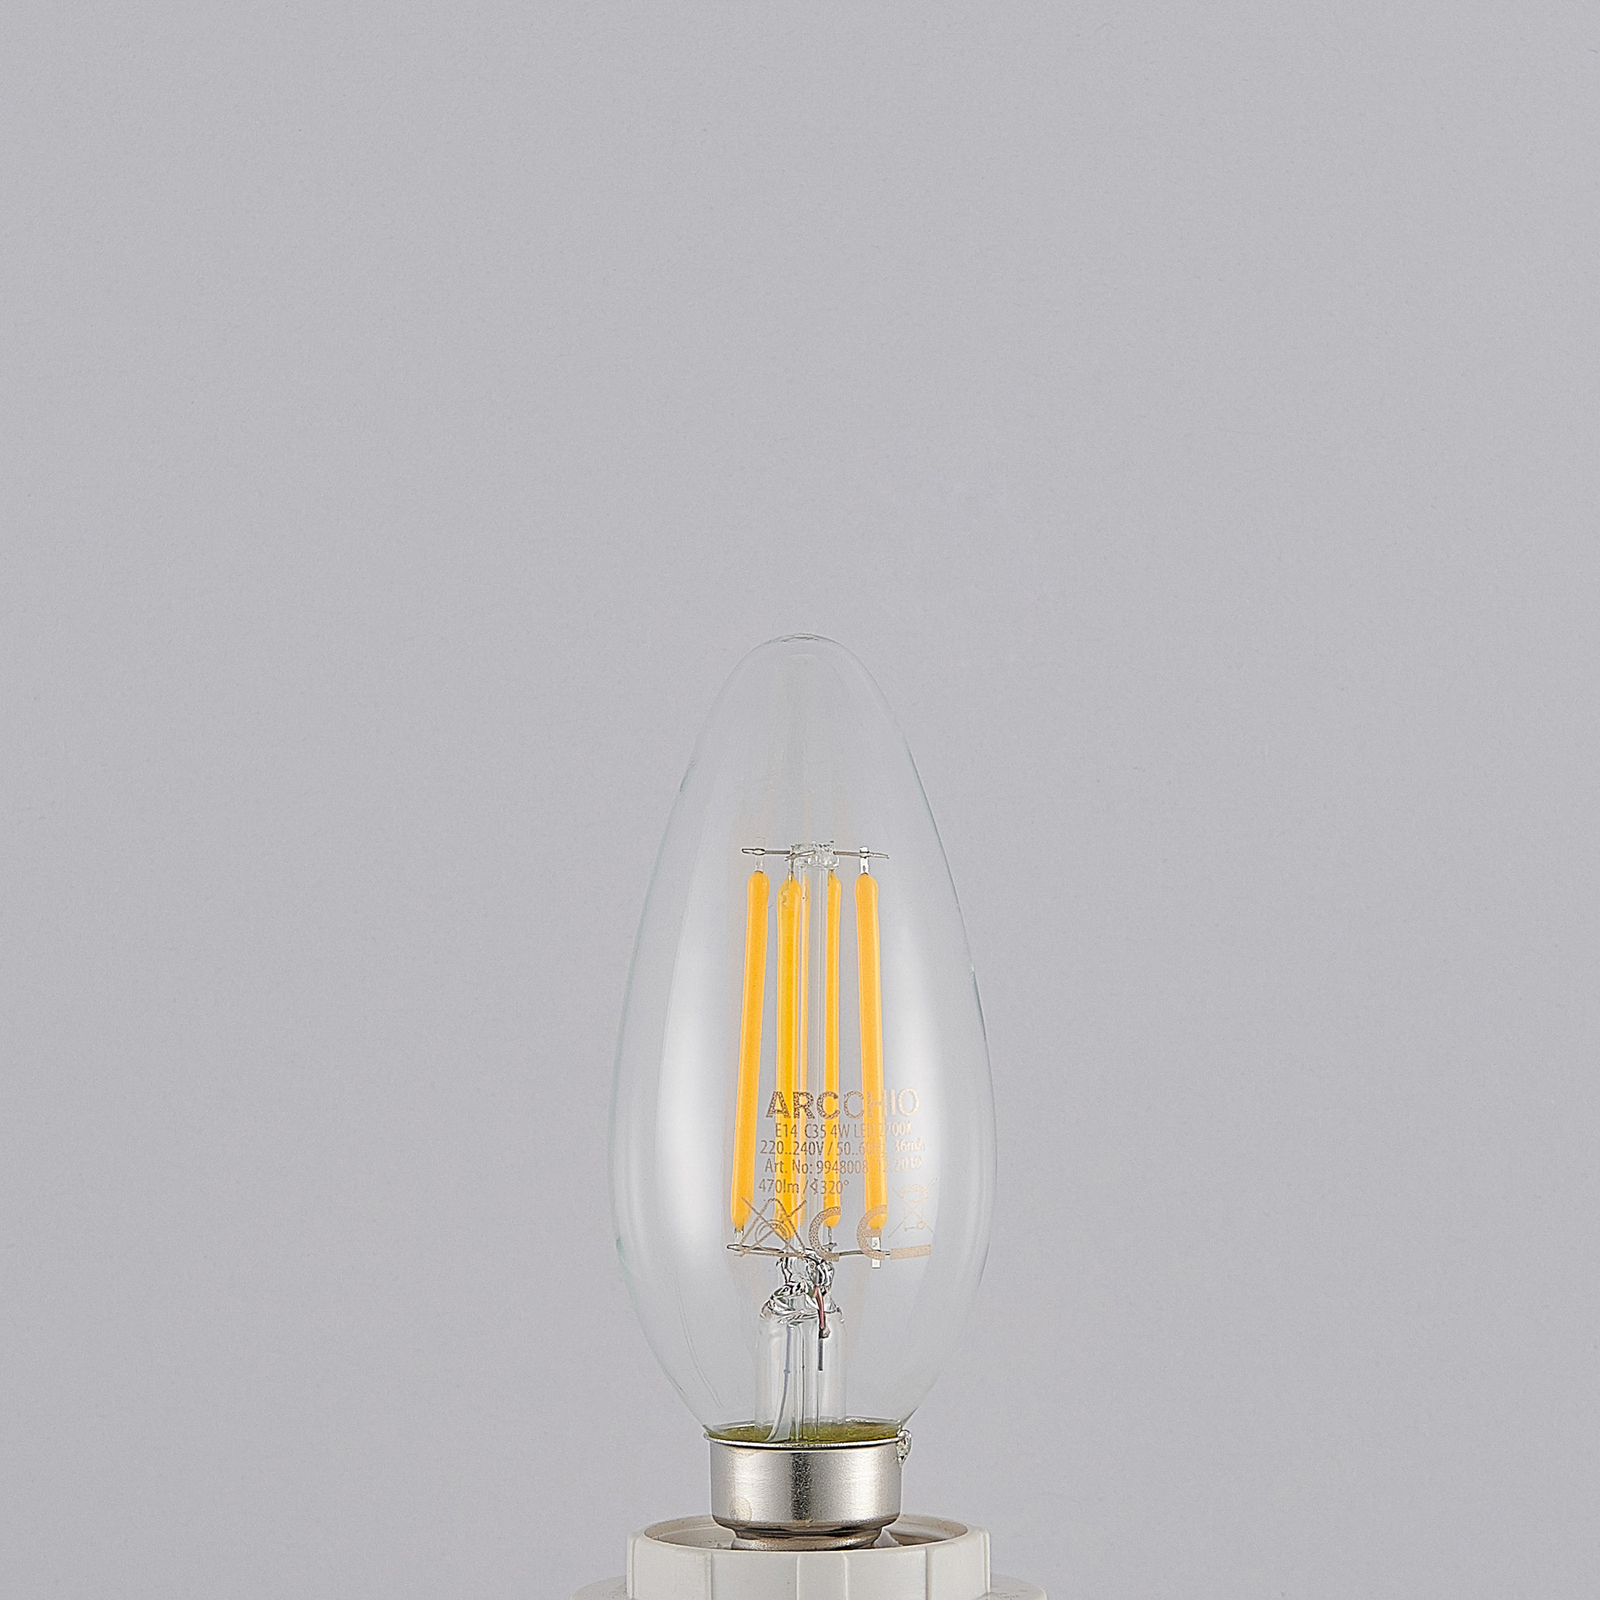 LED-filamentpære E14 4 W 827 3-trins-dæmper, 3 stk